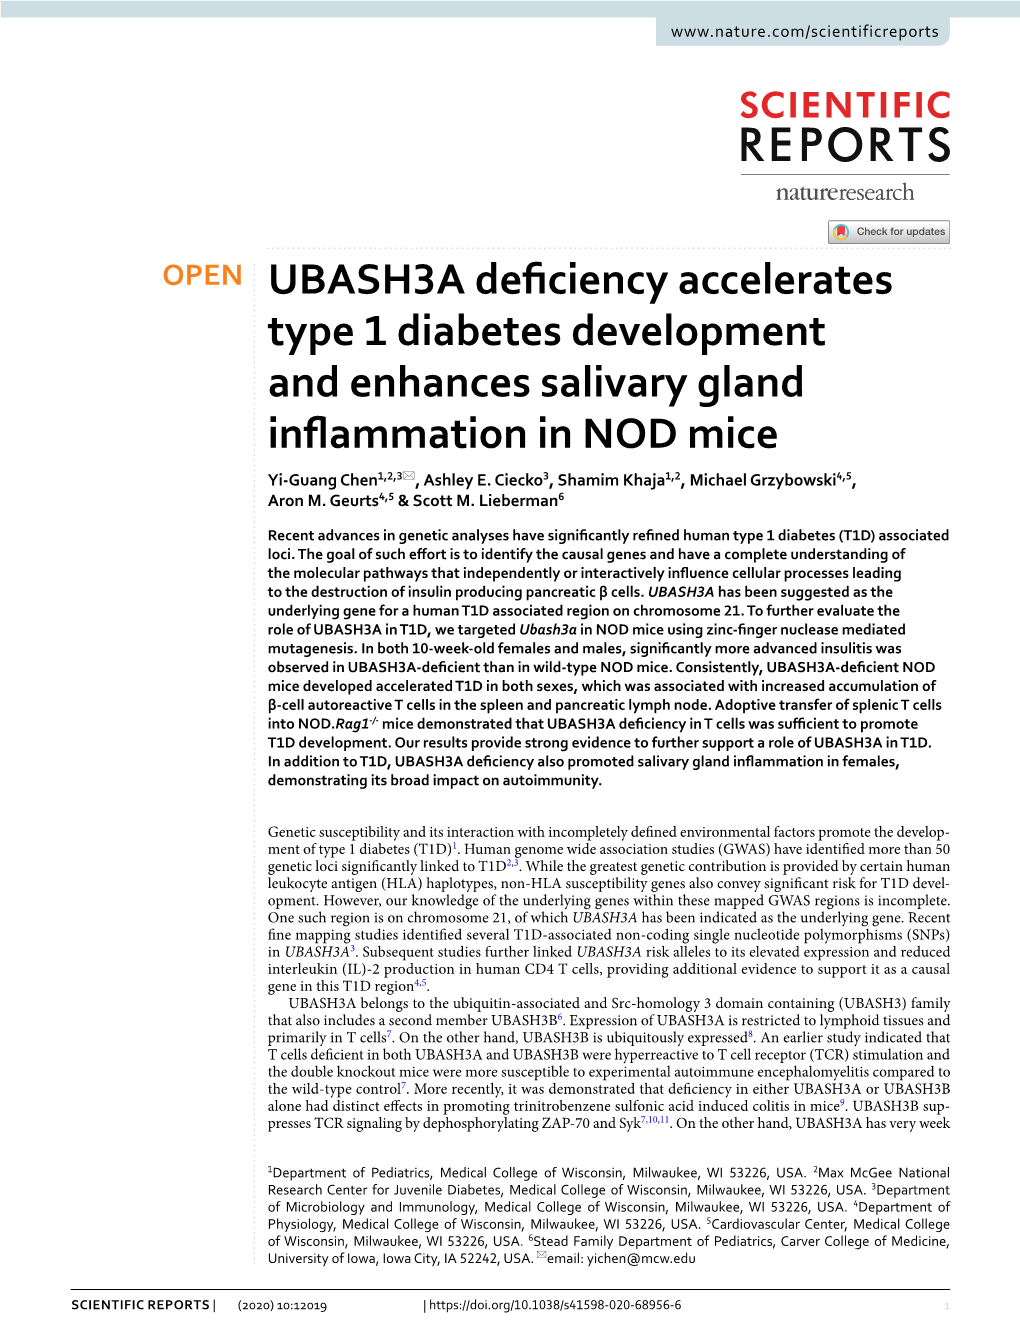 UBASH3A Deficiency Accelerates Type 1 Diabetes Development And